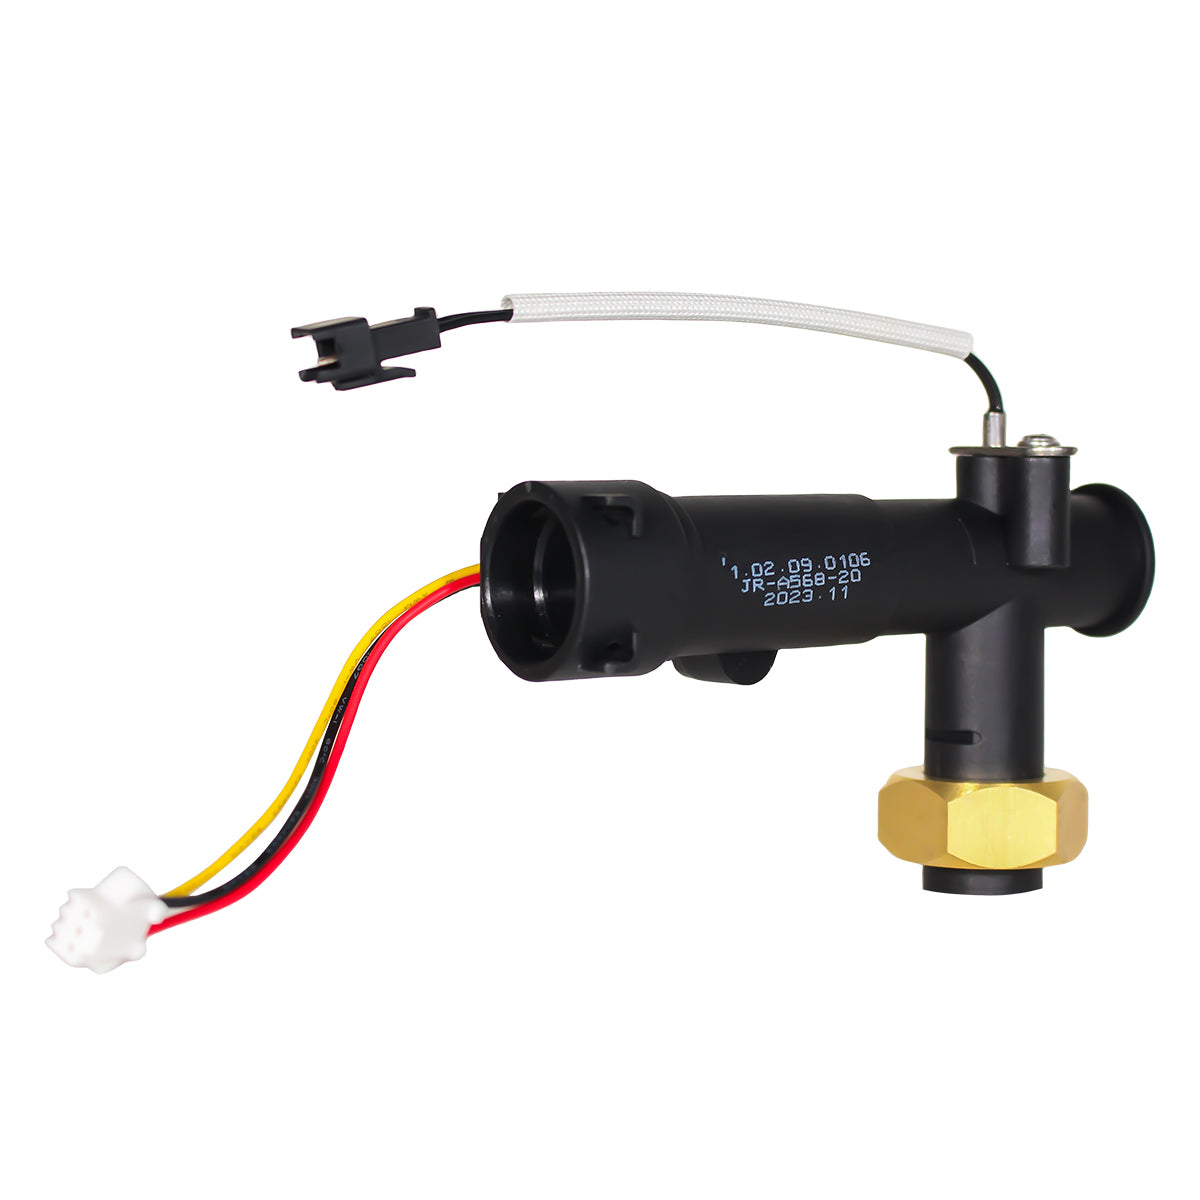 Water Flow Sensor #2 (for RV Water Heater)